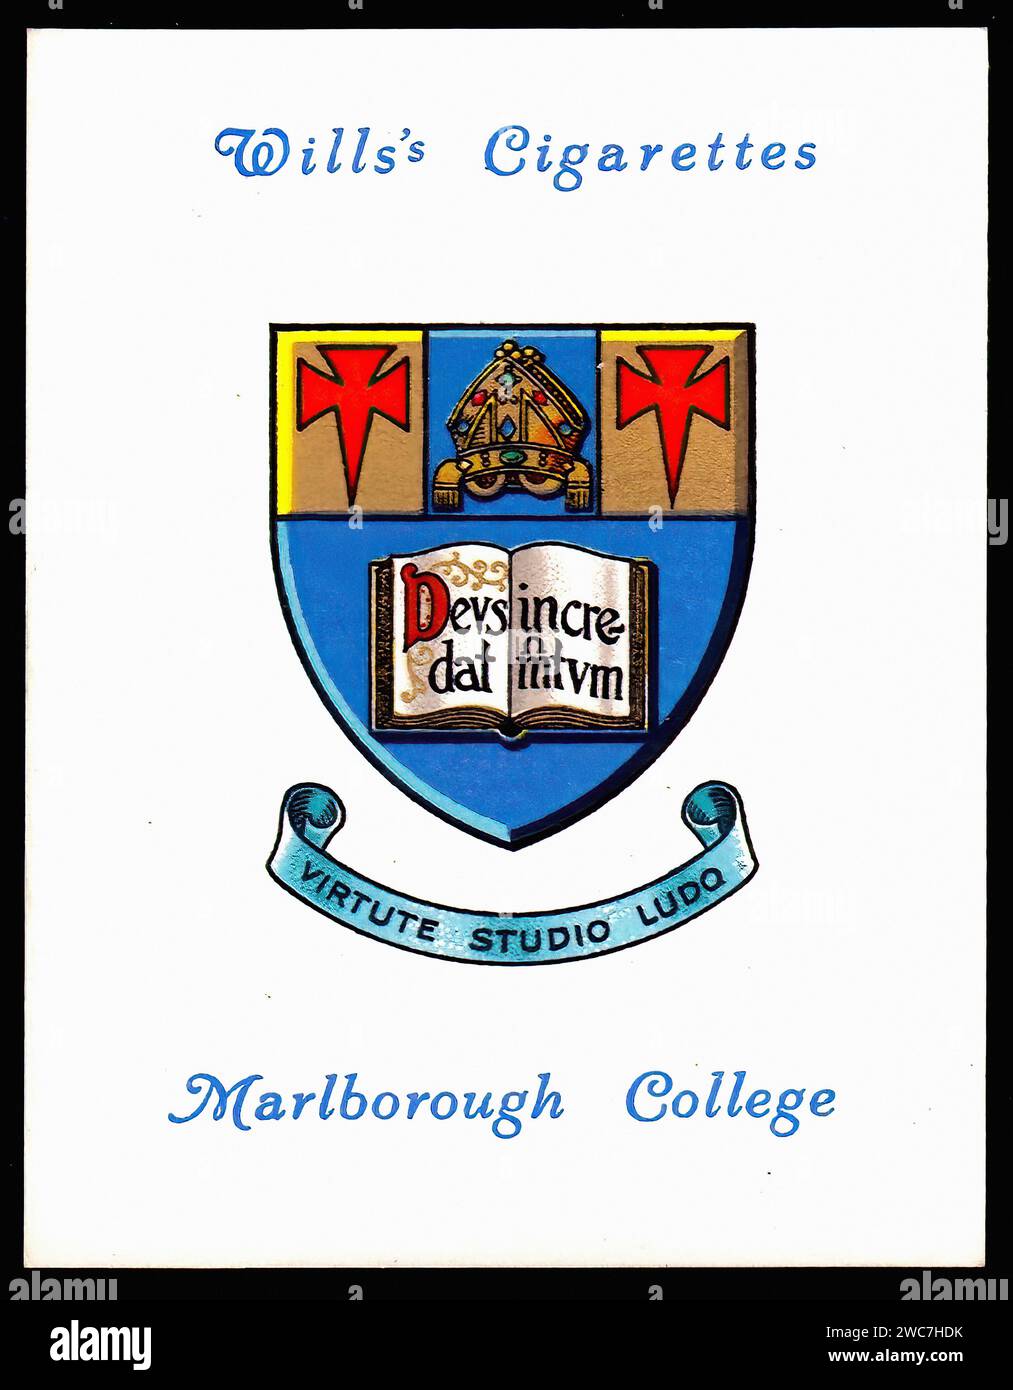 Arms of Marlborough School - Vintage Cigarette Card Illustration Stock Photo